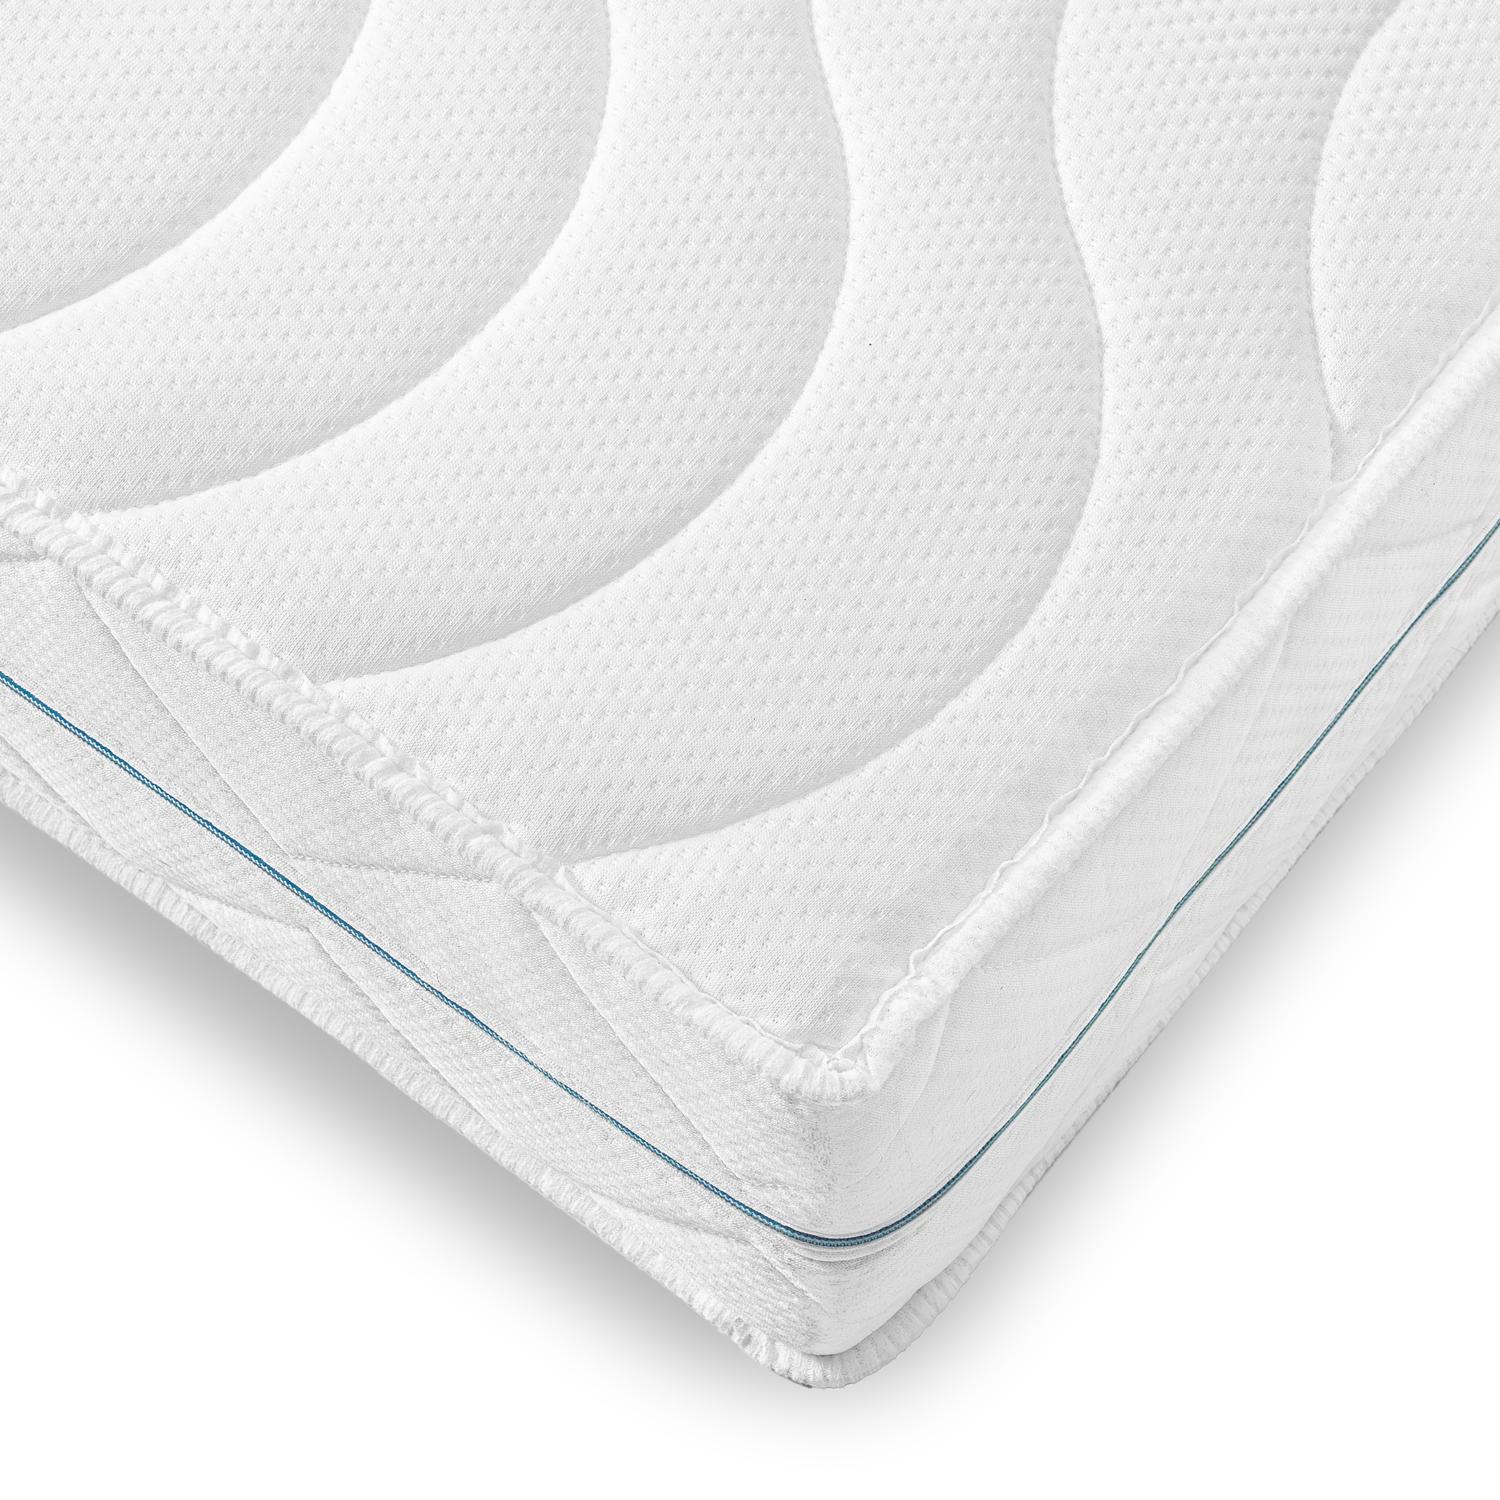 Supportho Premium madrassöverdrag 140 x 200 cm, höjd 18 cm